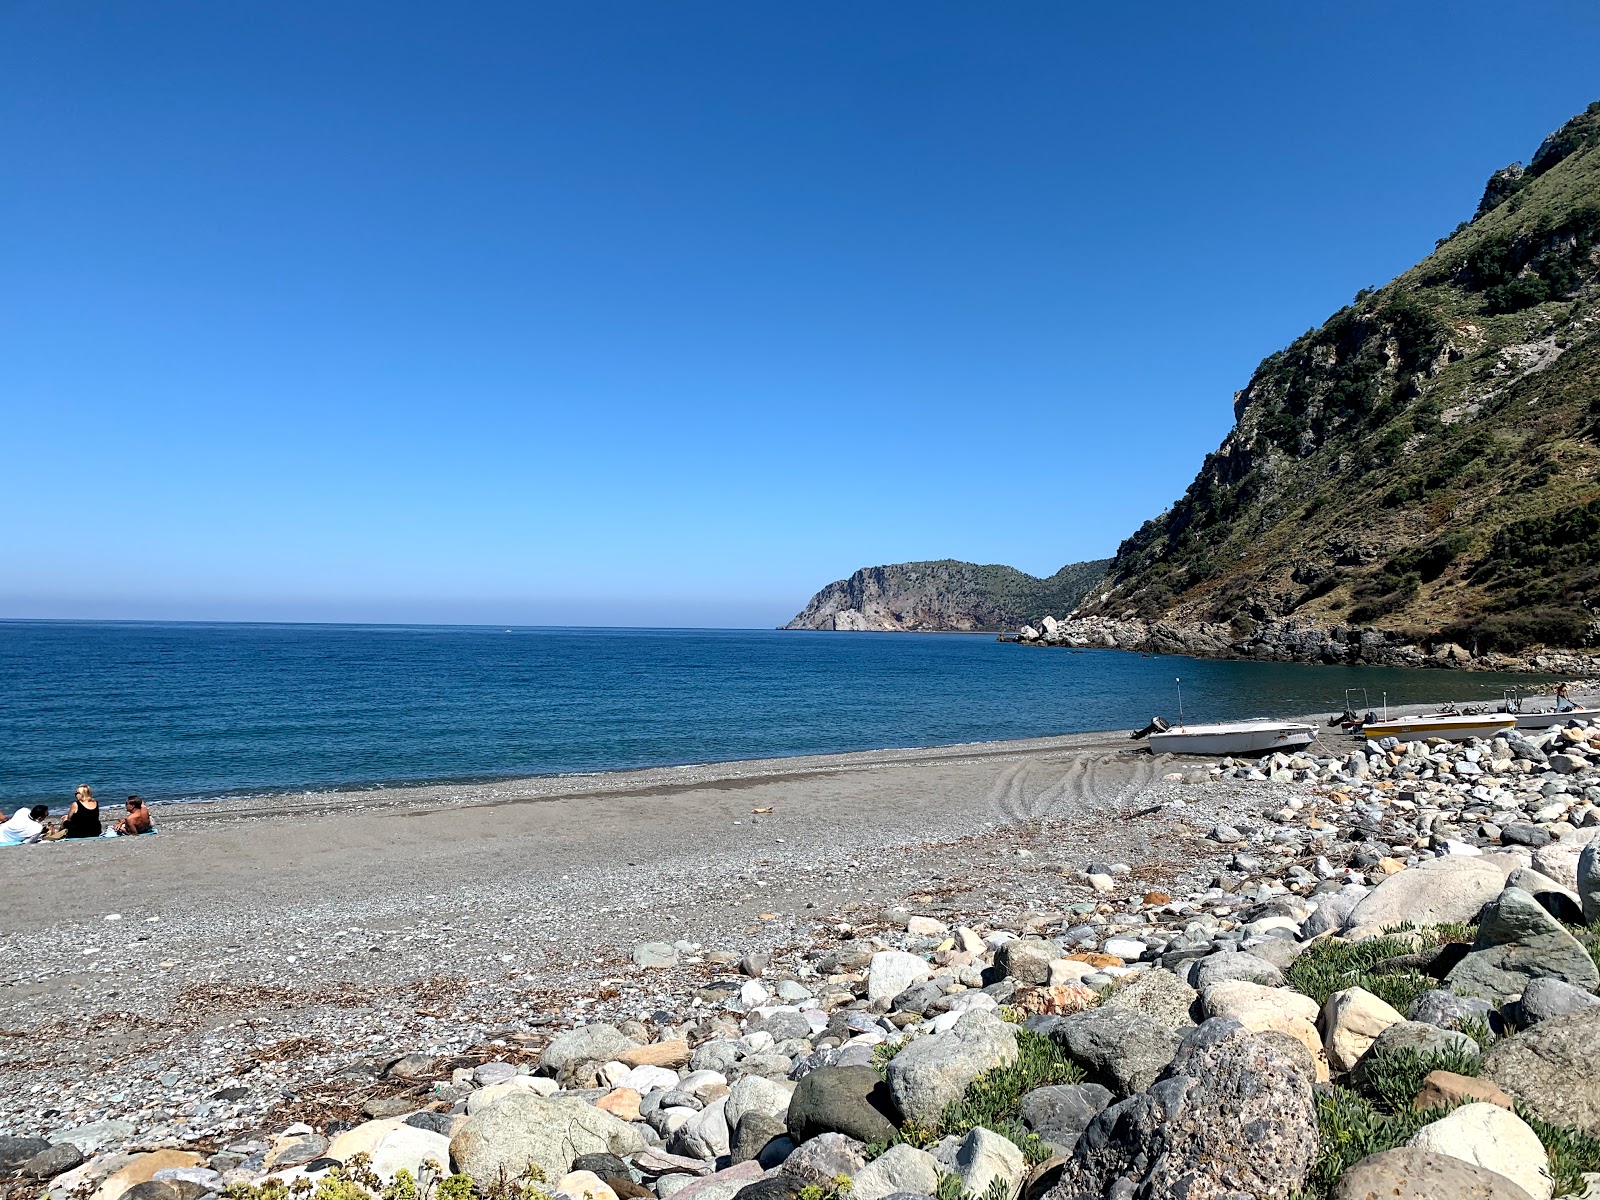 Fotografija Metochiou beach z turkizna čista voda površino